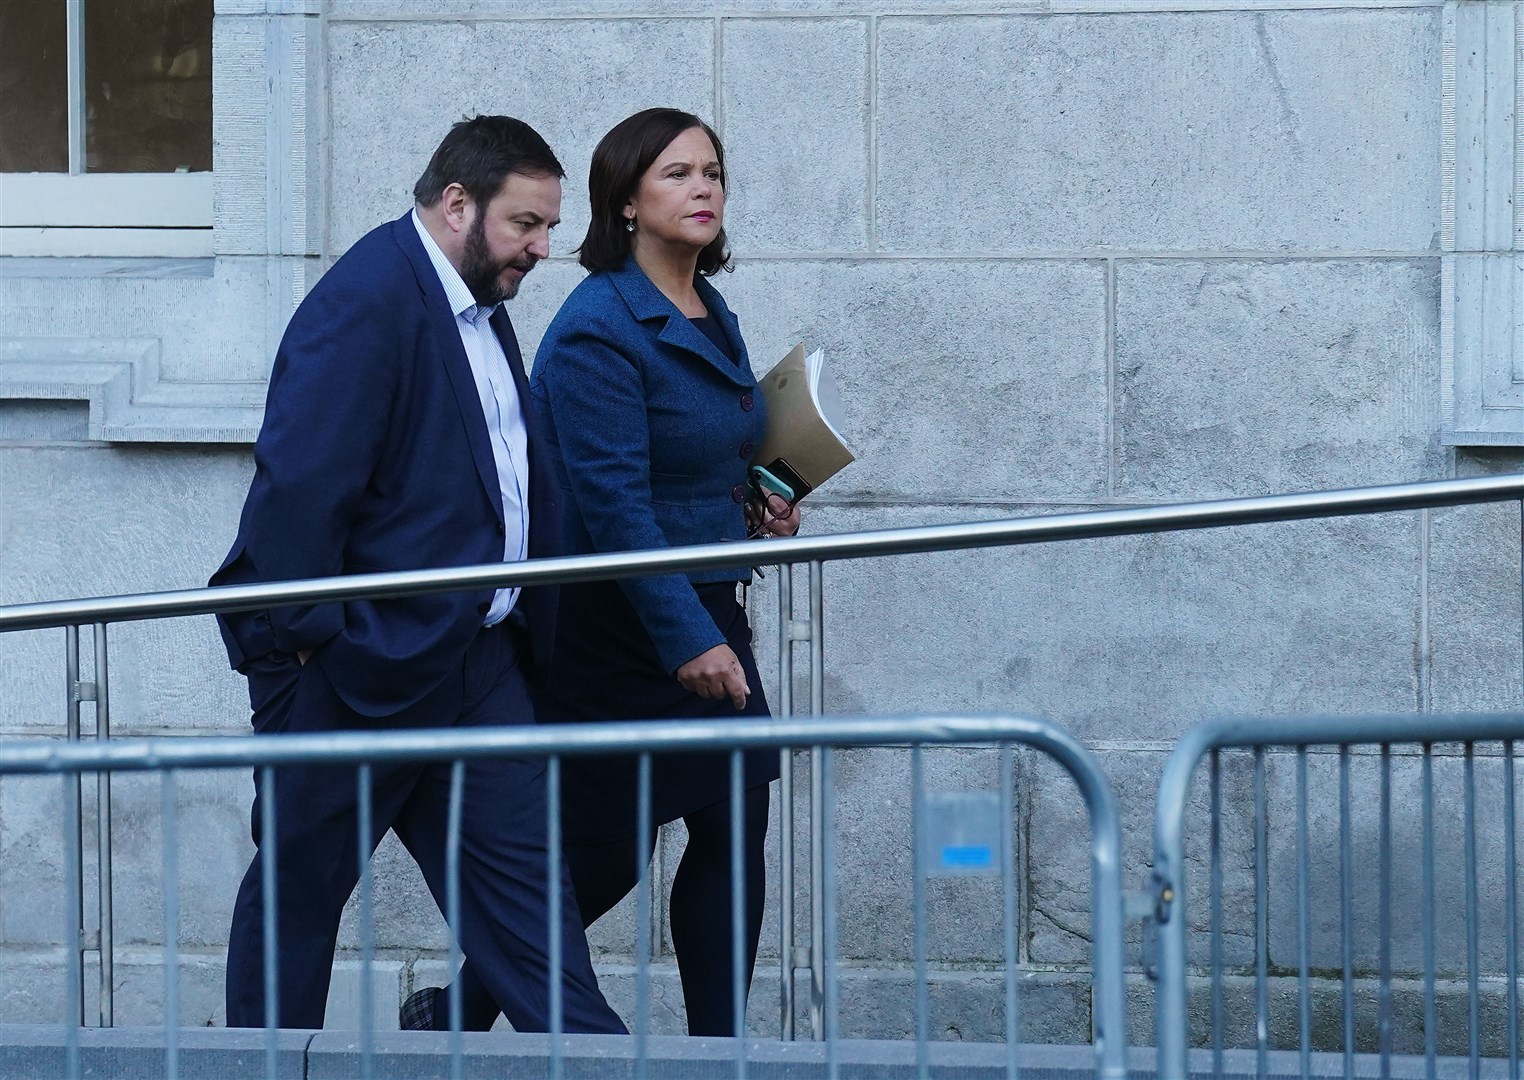 Sinn Fein leader Mary Lou McDonald arrives at the Dail parliament ahead of Saturday’s sitting (Brian Lawless/PA)